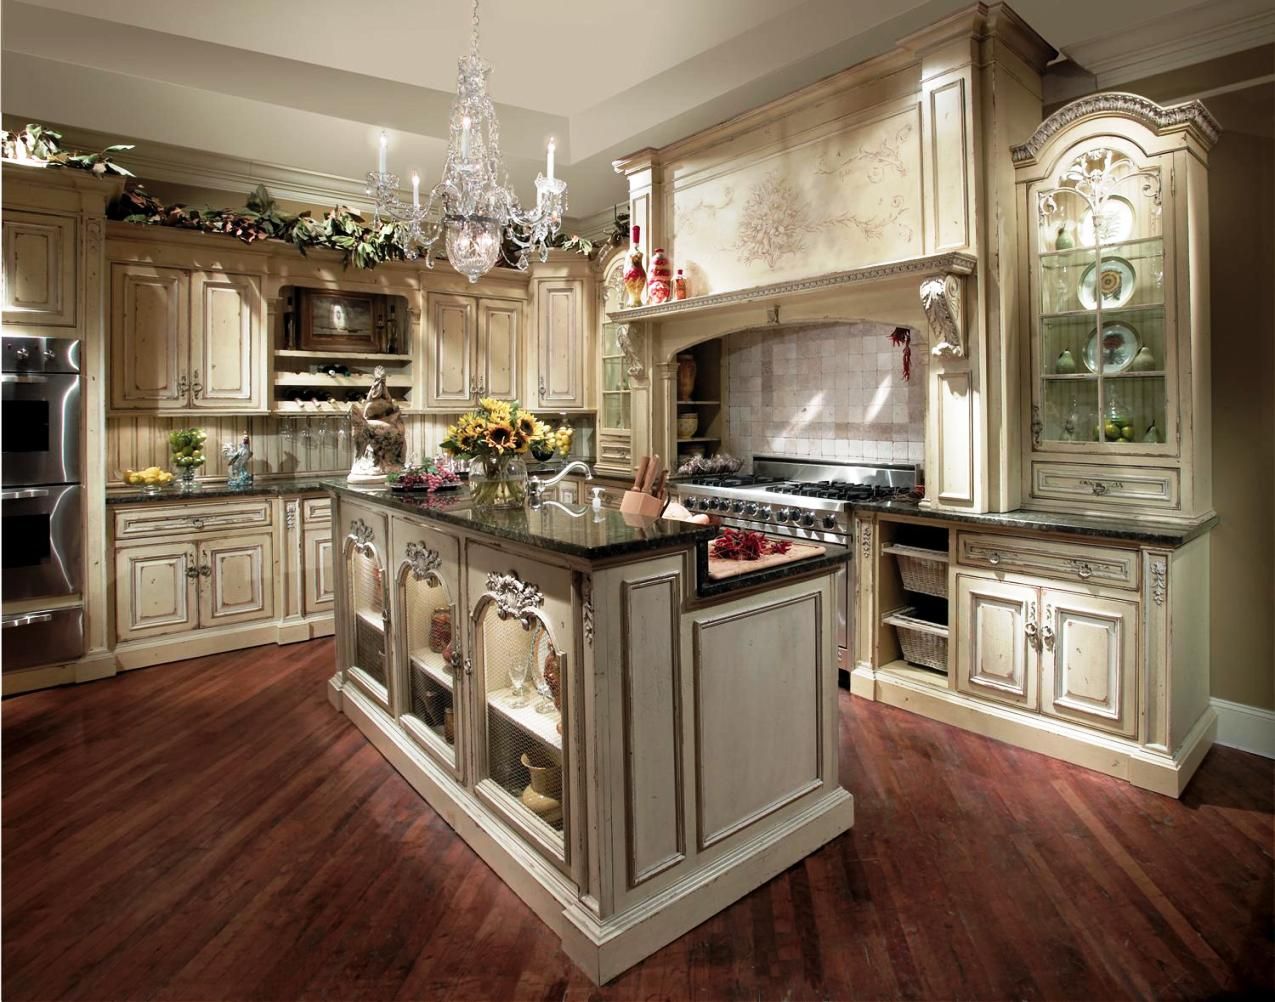 Victorian Rustic Kitchen Interior Design #3092 | House Decoration Ideas